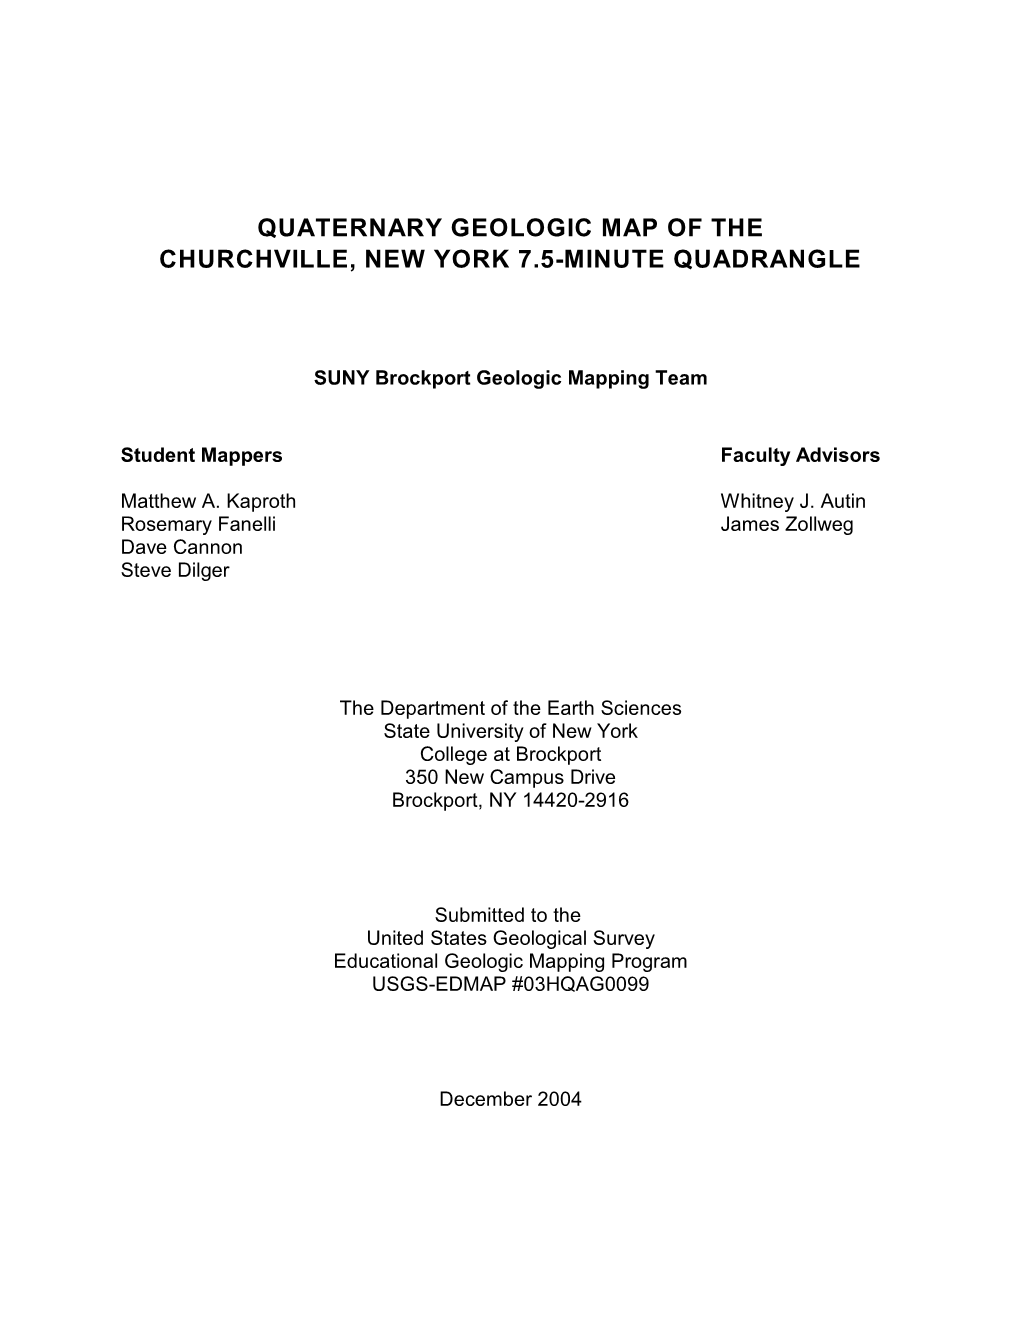 Quaternary Geologic Map of the Churchville, New York 7.5-Minute Quadrangle